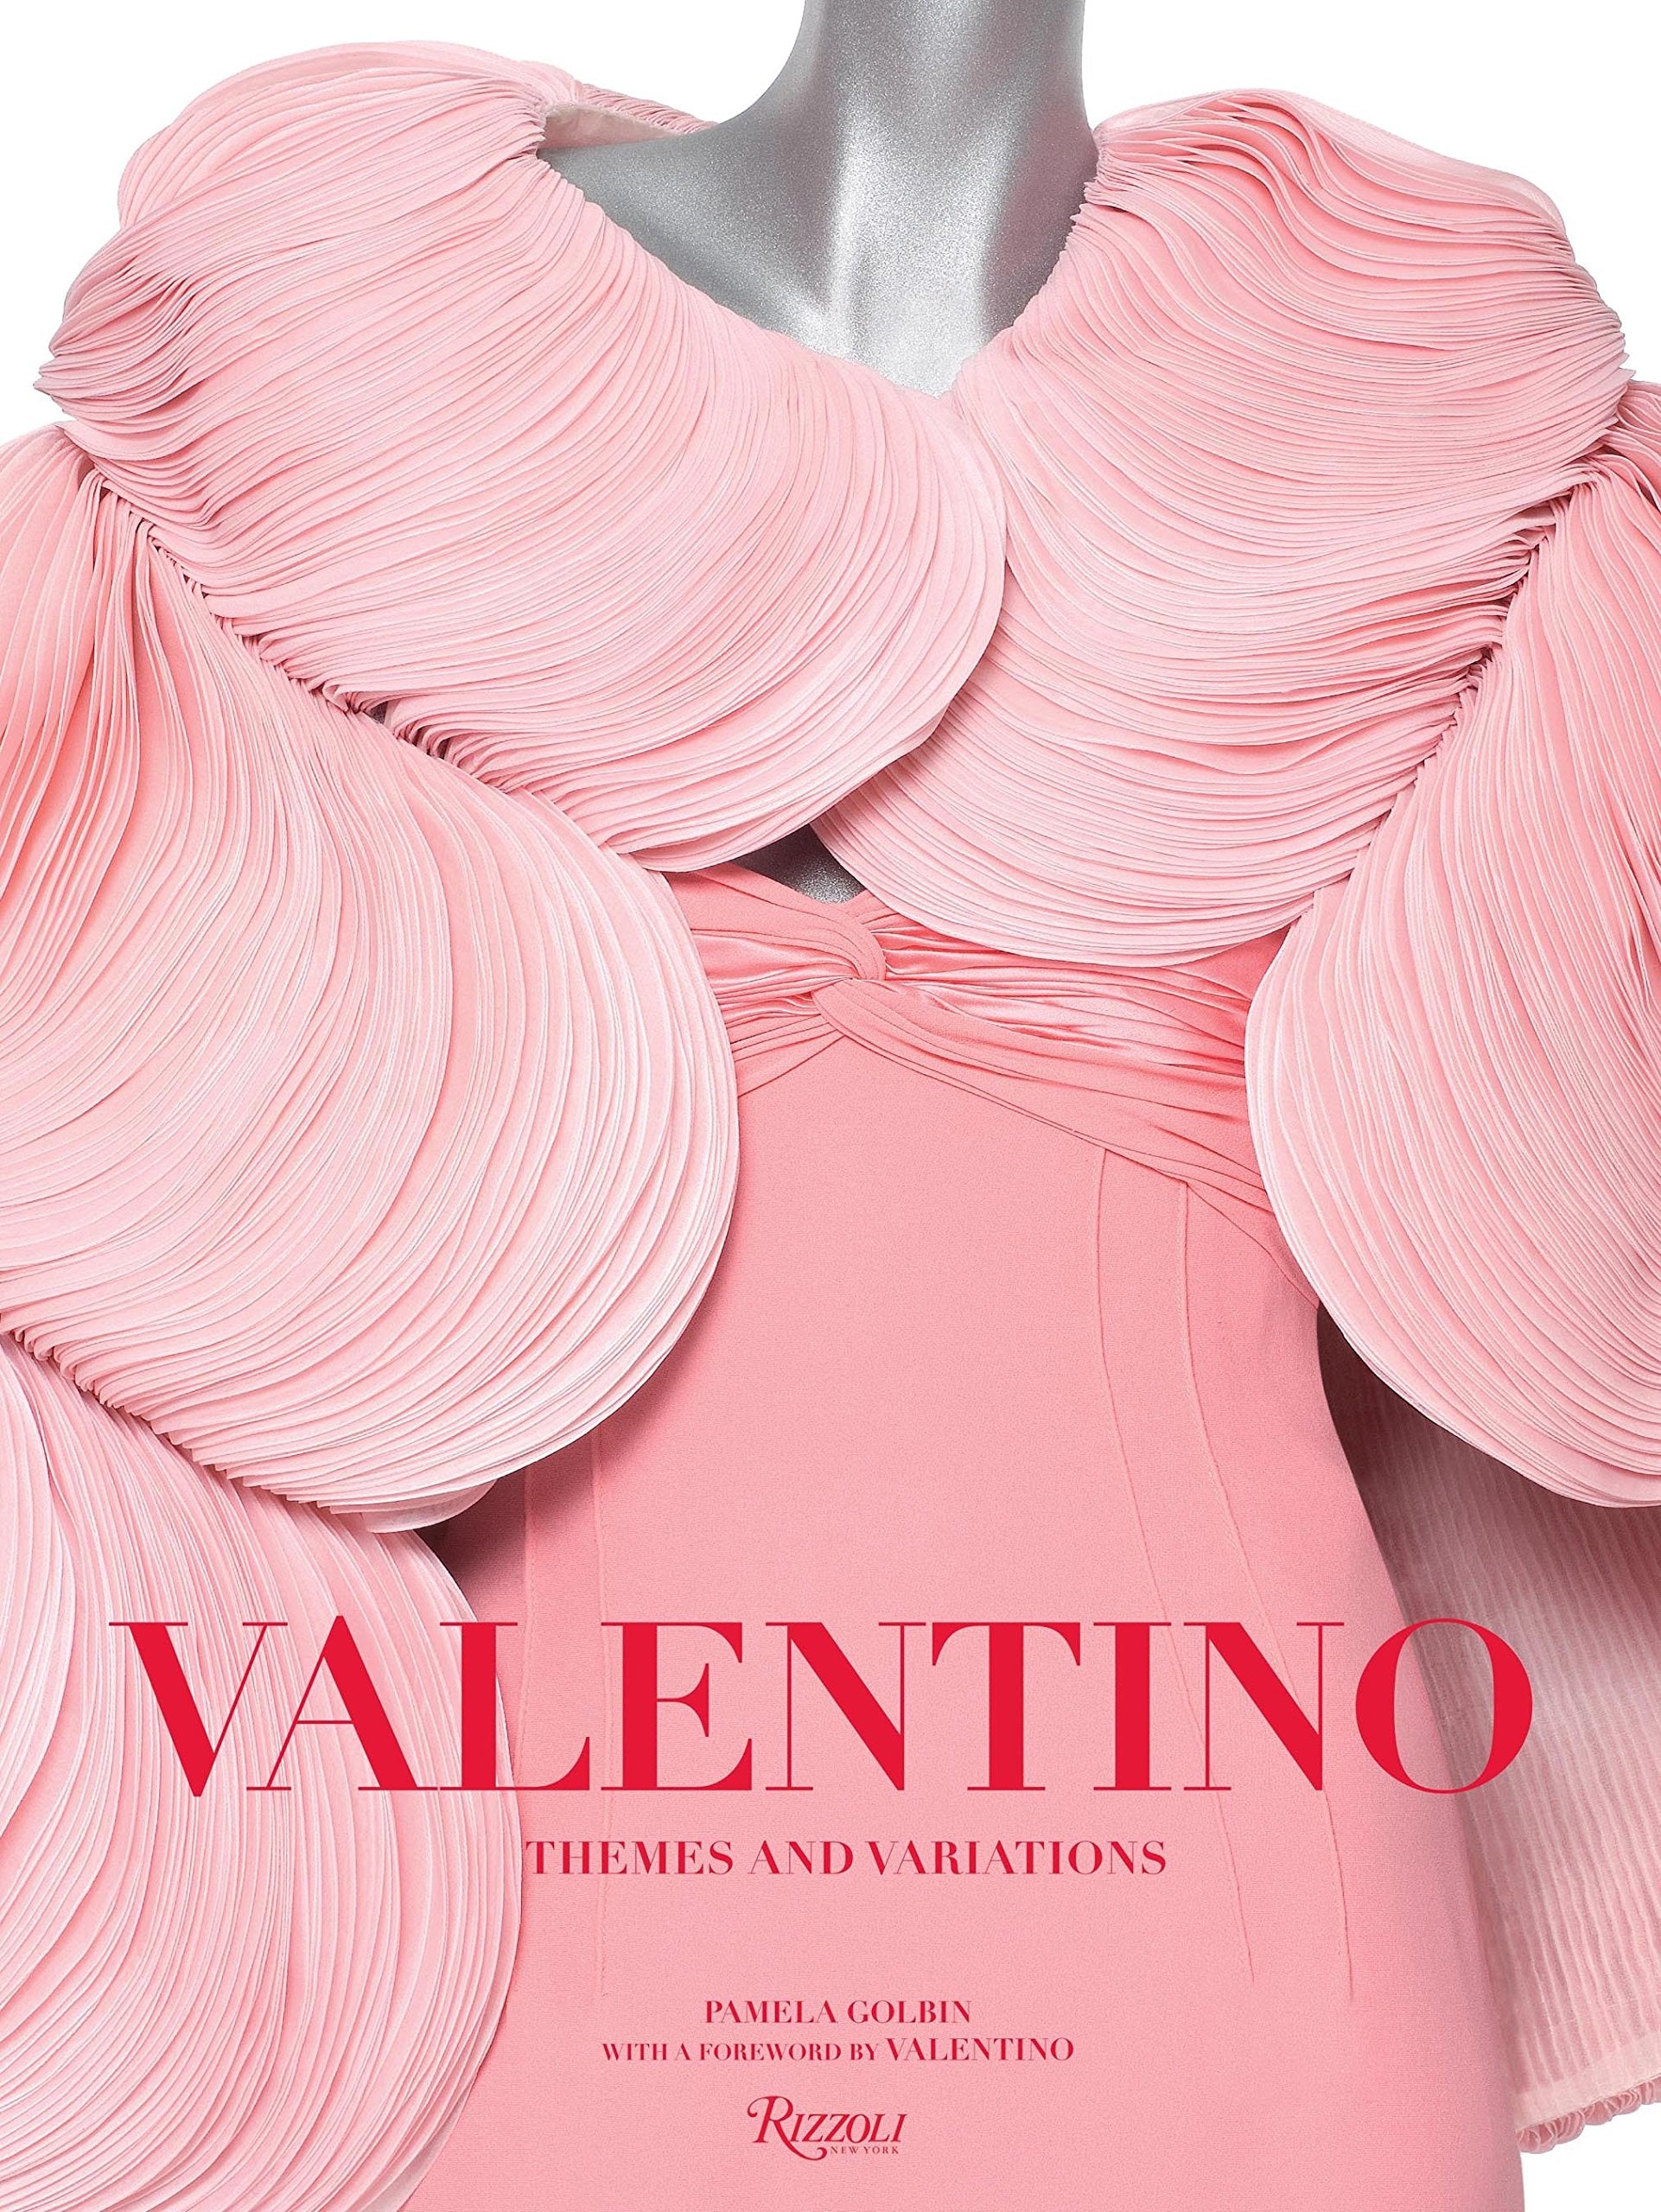 Valentino Themes + Variation